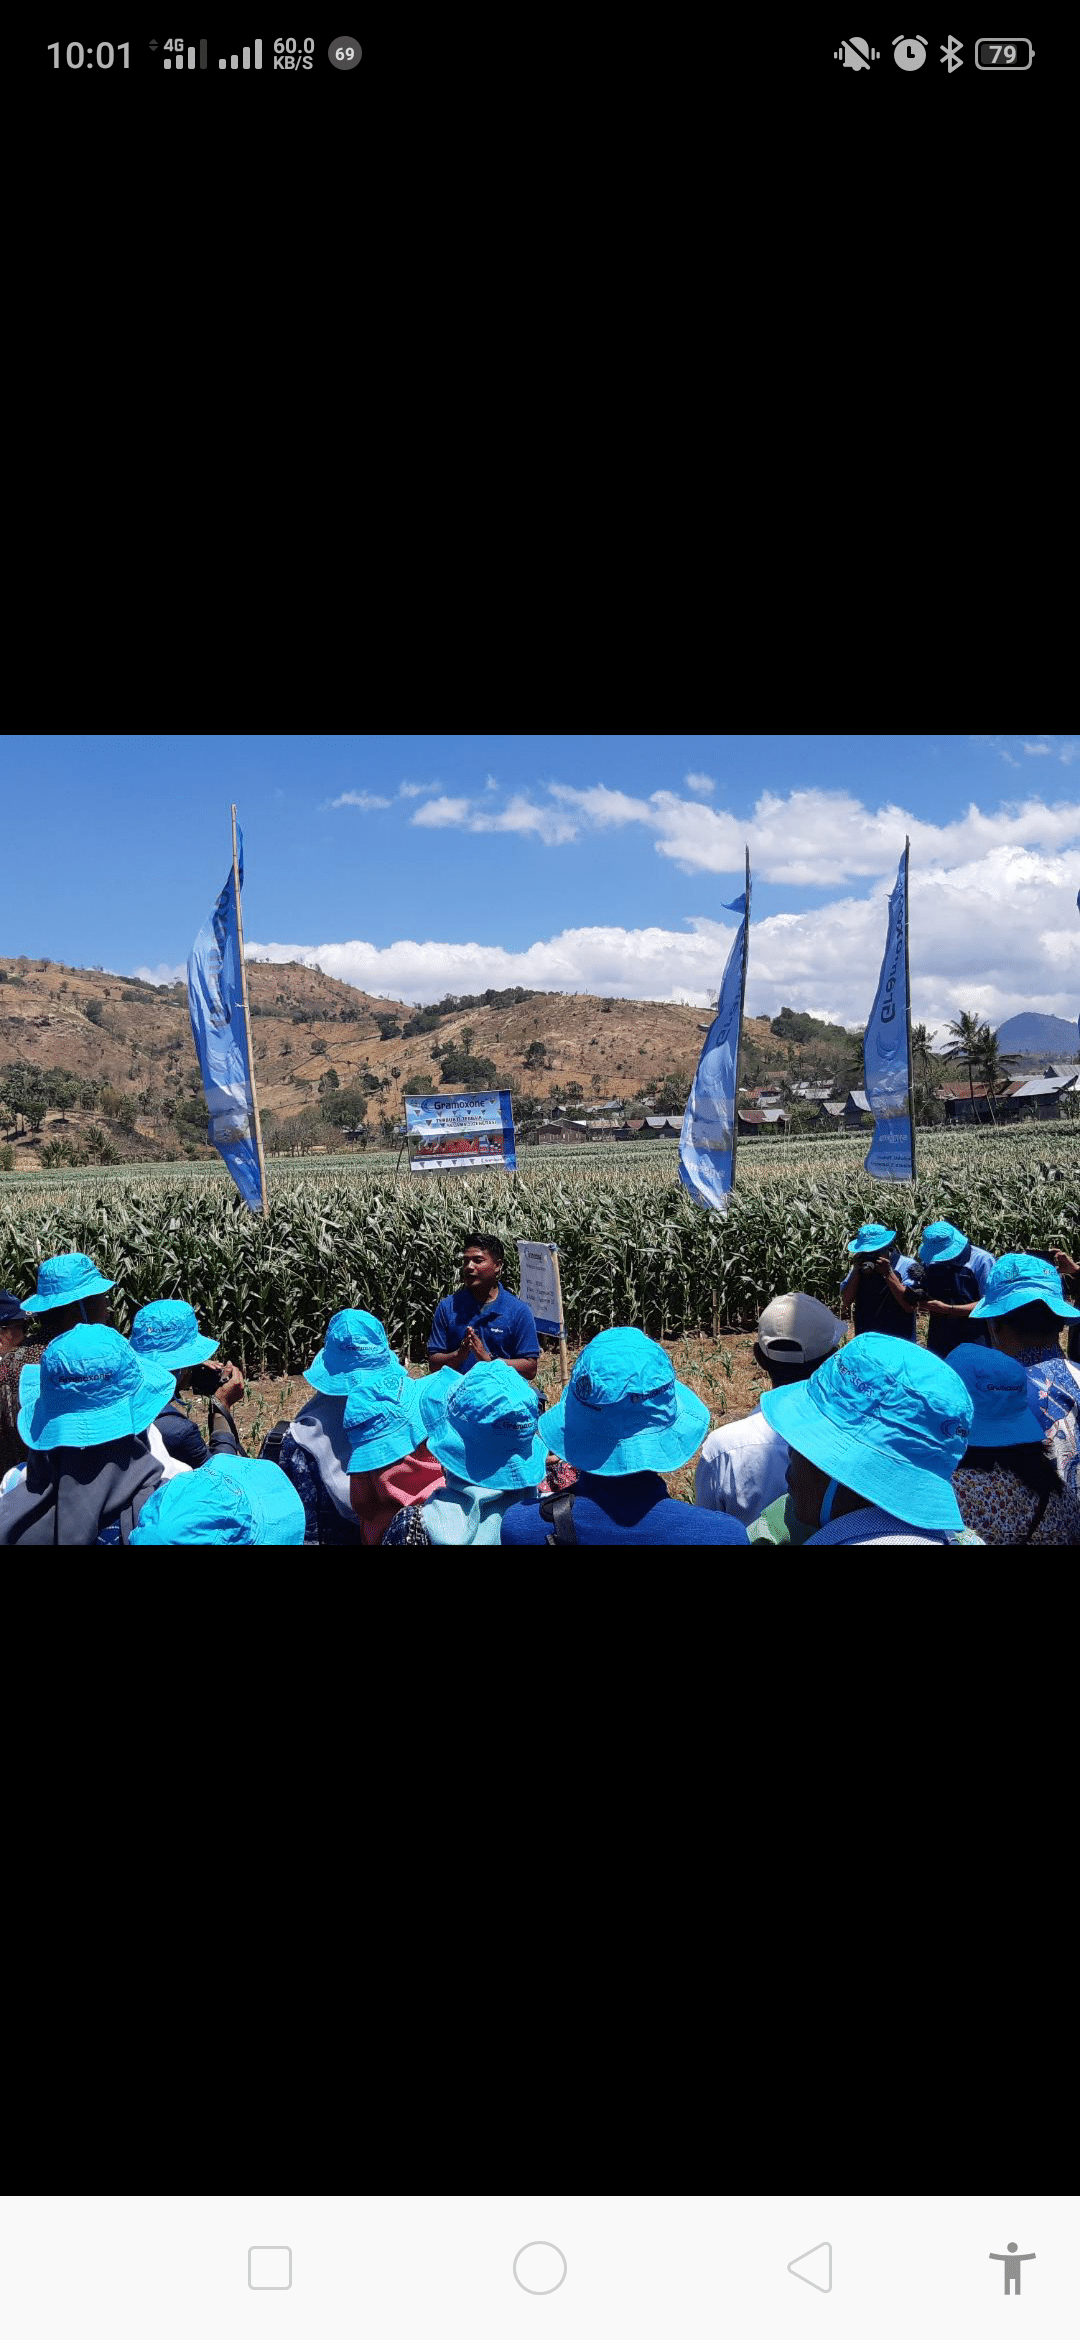 Benih jagung hibrida NK 7328 (NK Sumo) merupakan salah satu benih hibrida unggulan hasil pemuliaan oleh peneliti Syngenta yang berada di Desa Pencong, Kecamatan Biringbulu, Kabupaten Gowa, Rabu, 2 Oktober 2019.